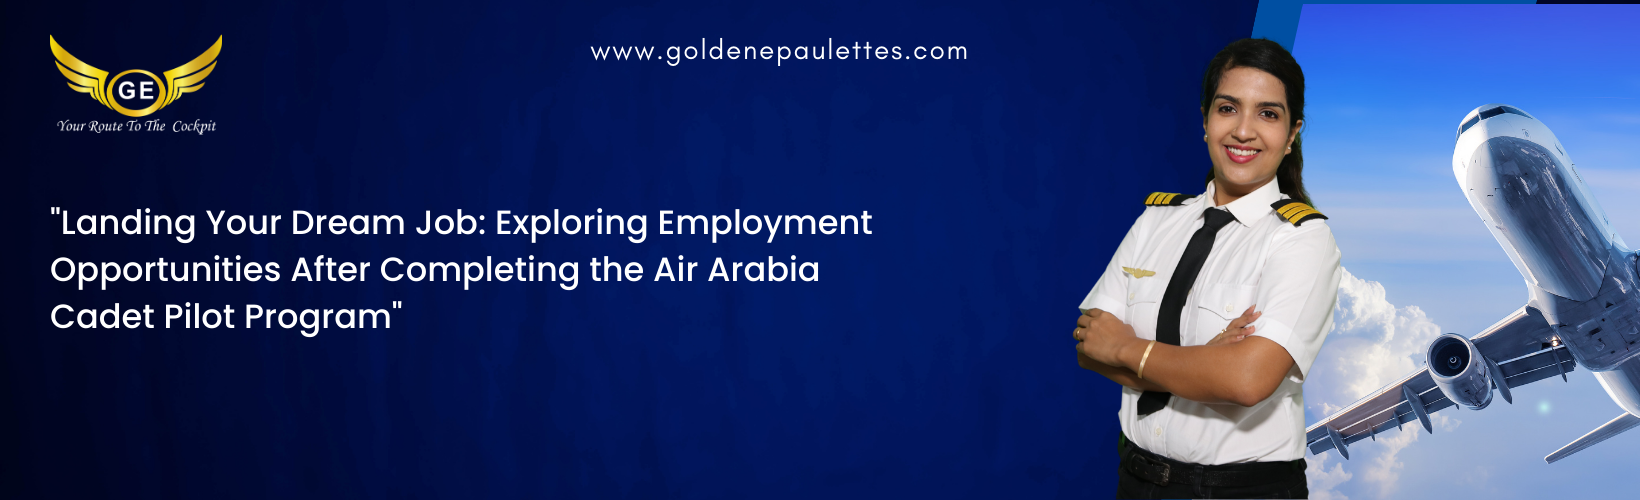 The Value of an Air Arabia Cadet Pilot Program Certification